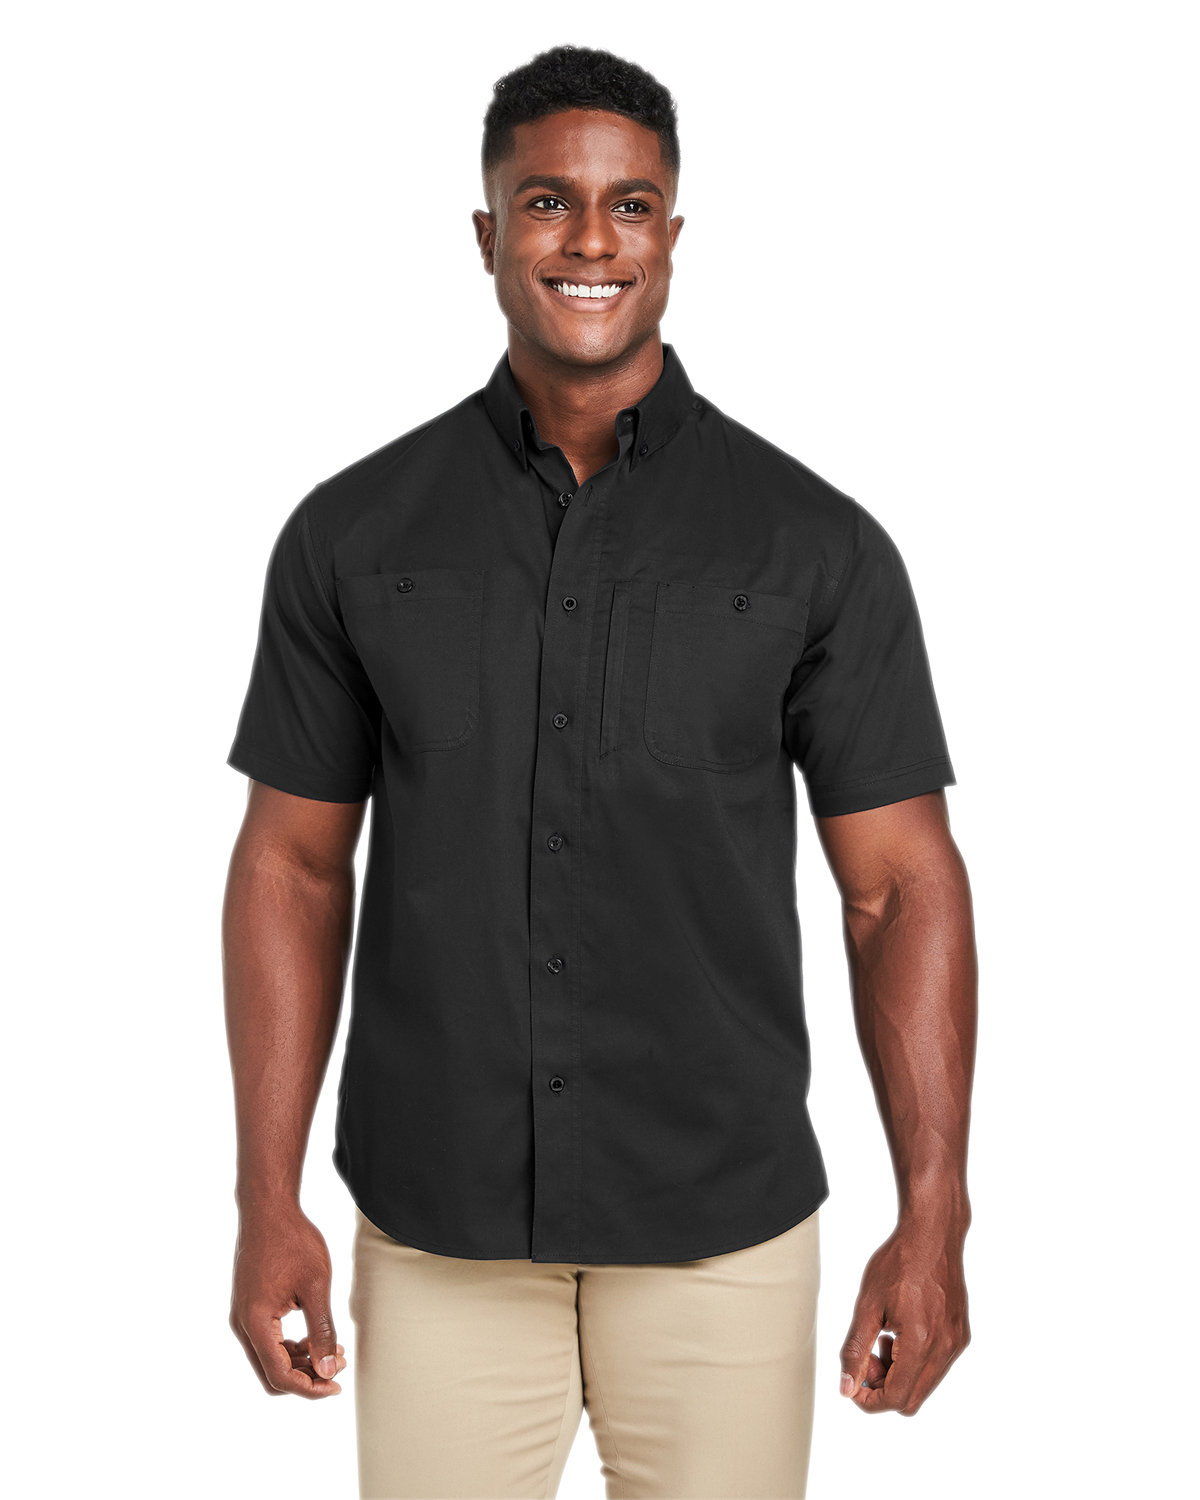 Men's Advantage IL Short-Sleeve Work Shirt - M585